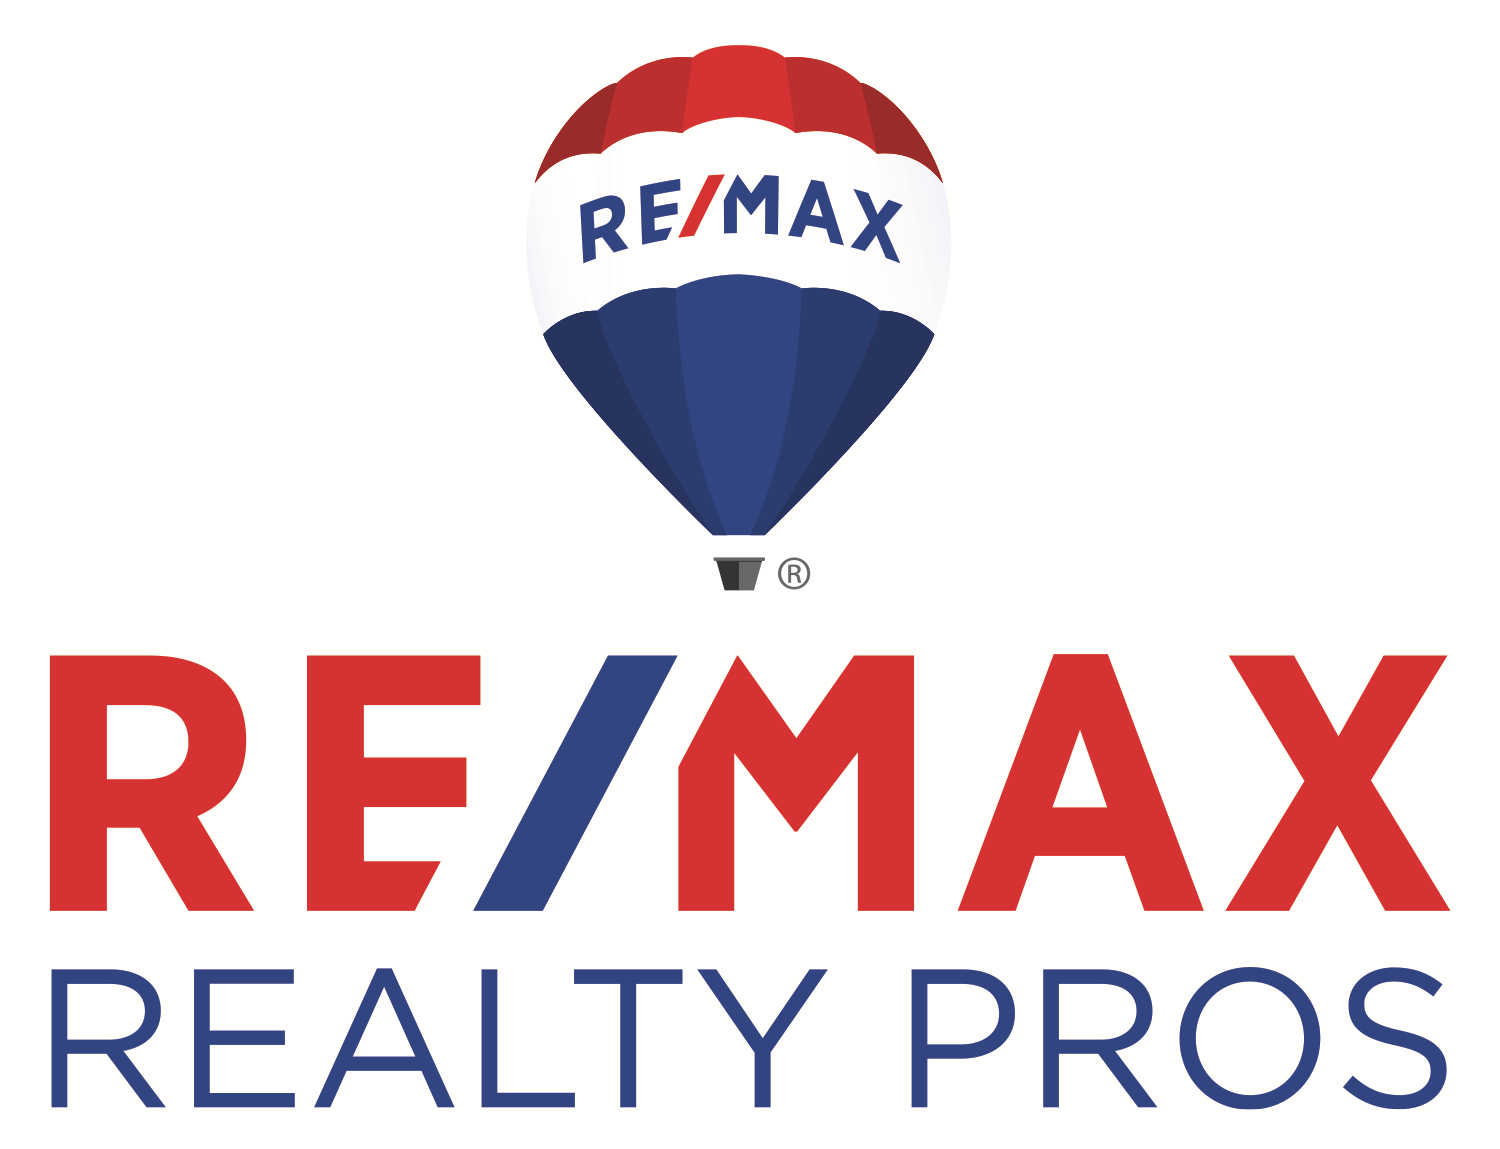 RE/MAX Realty Pros logo